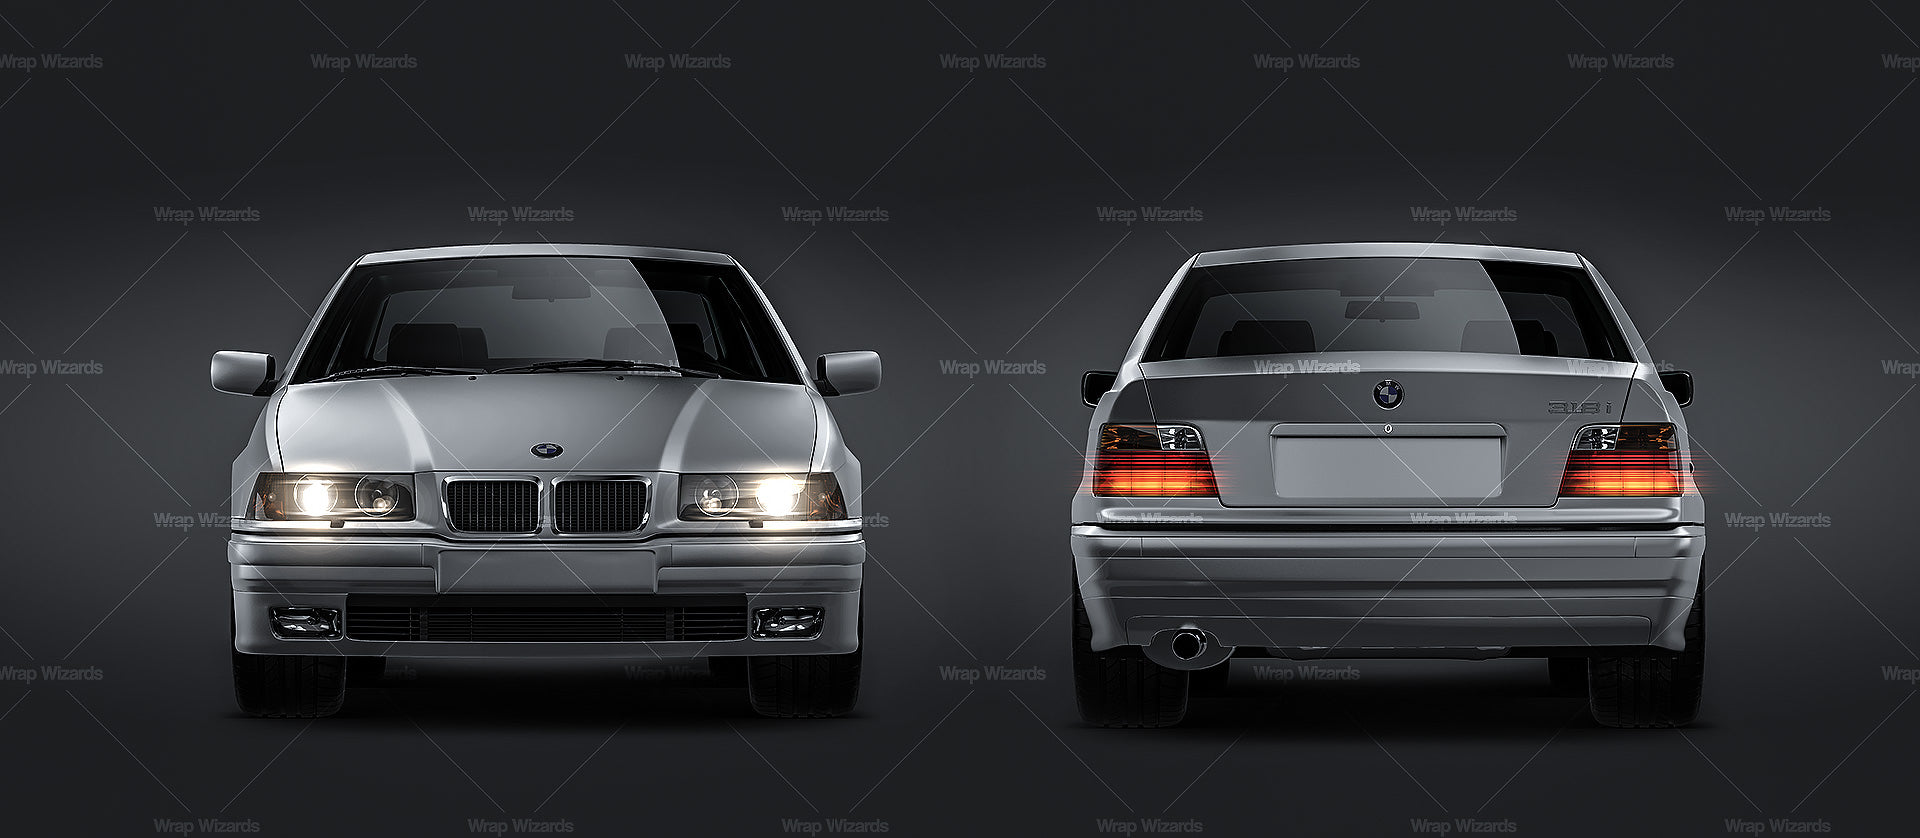 BMW 3-Series E36 Sedan satin matt finish - all sides Car Mockup Template.psd